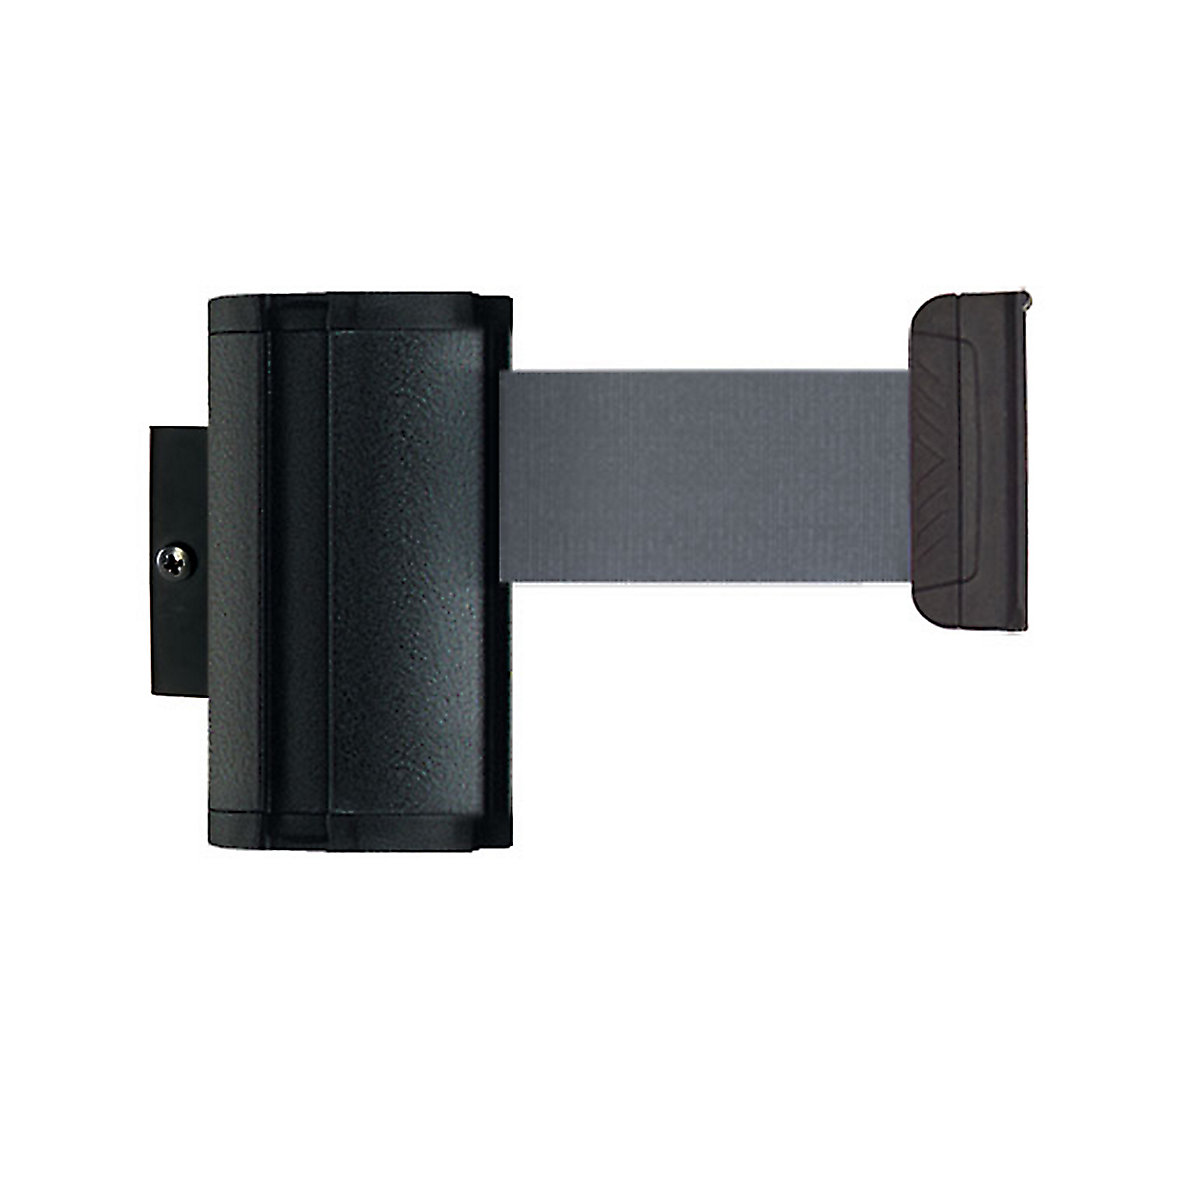 Wall Mount tape belt cartridge, belt extends to max. 2300 mm, belt colour silver grey-8